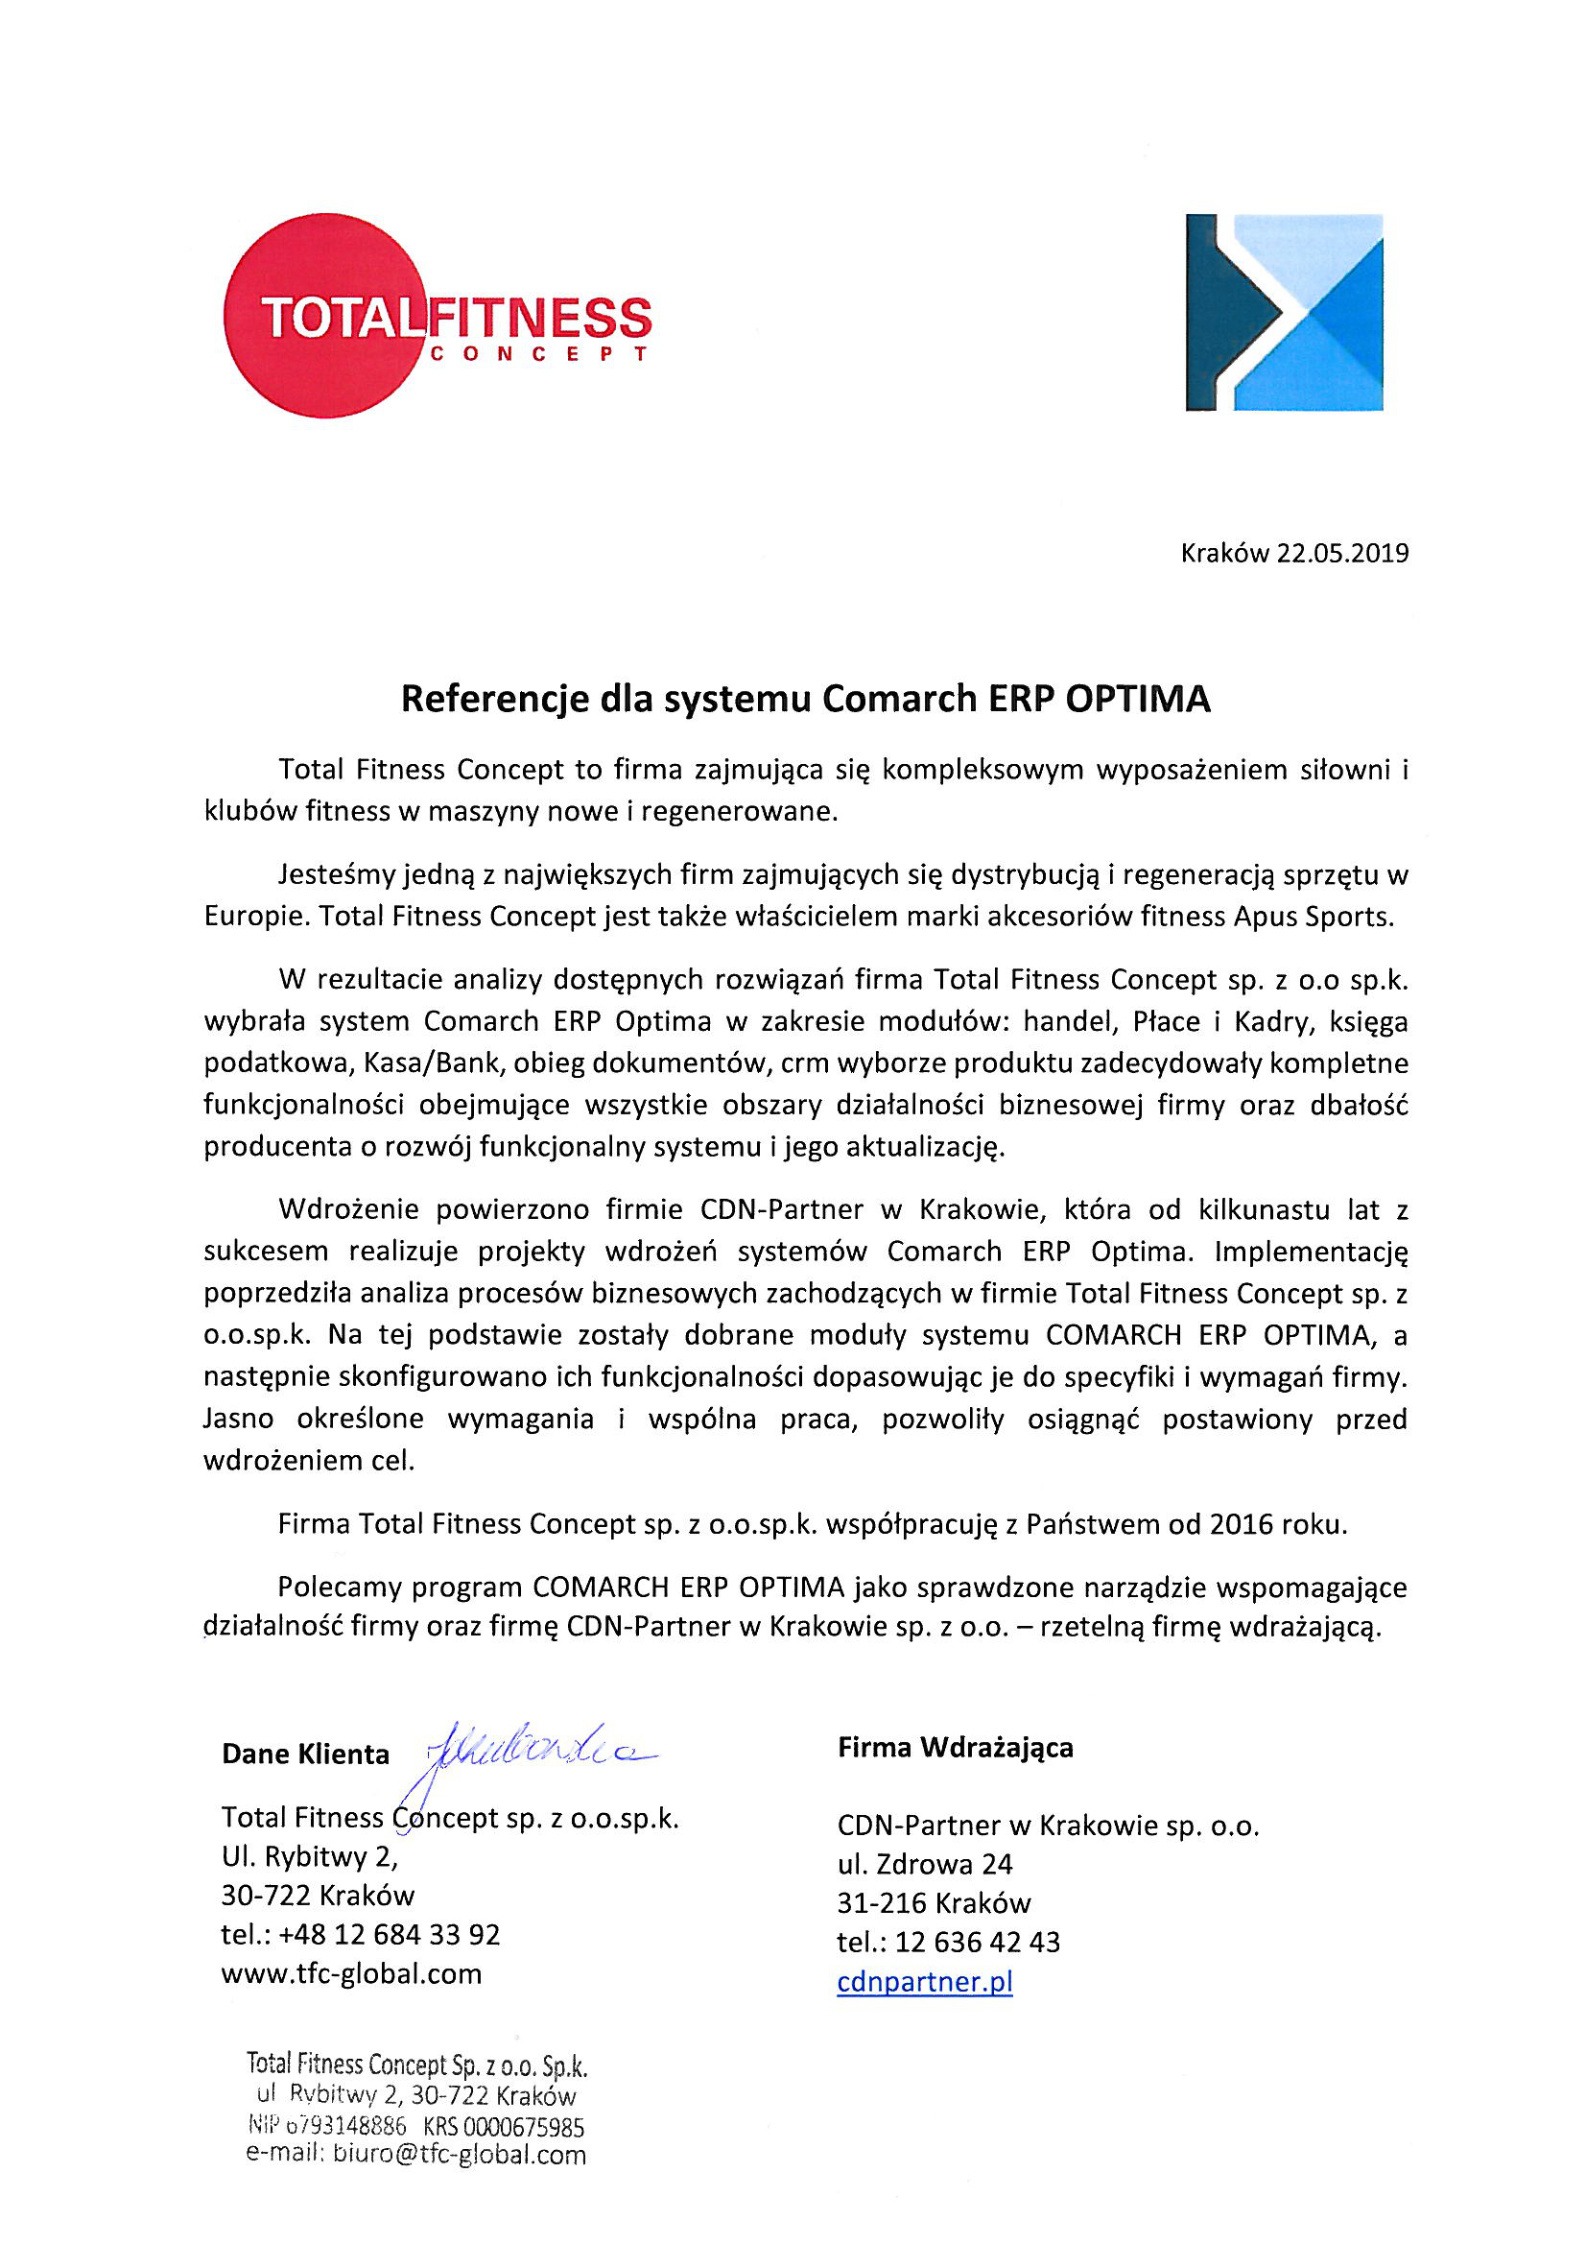 Referencje od firmy Total Fitness Concept – wdrożenie systemu Comarch ERP Optima